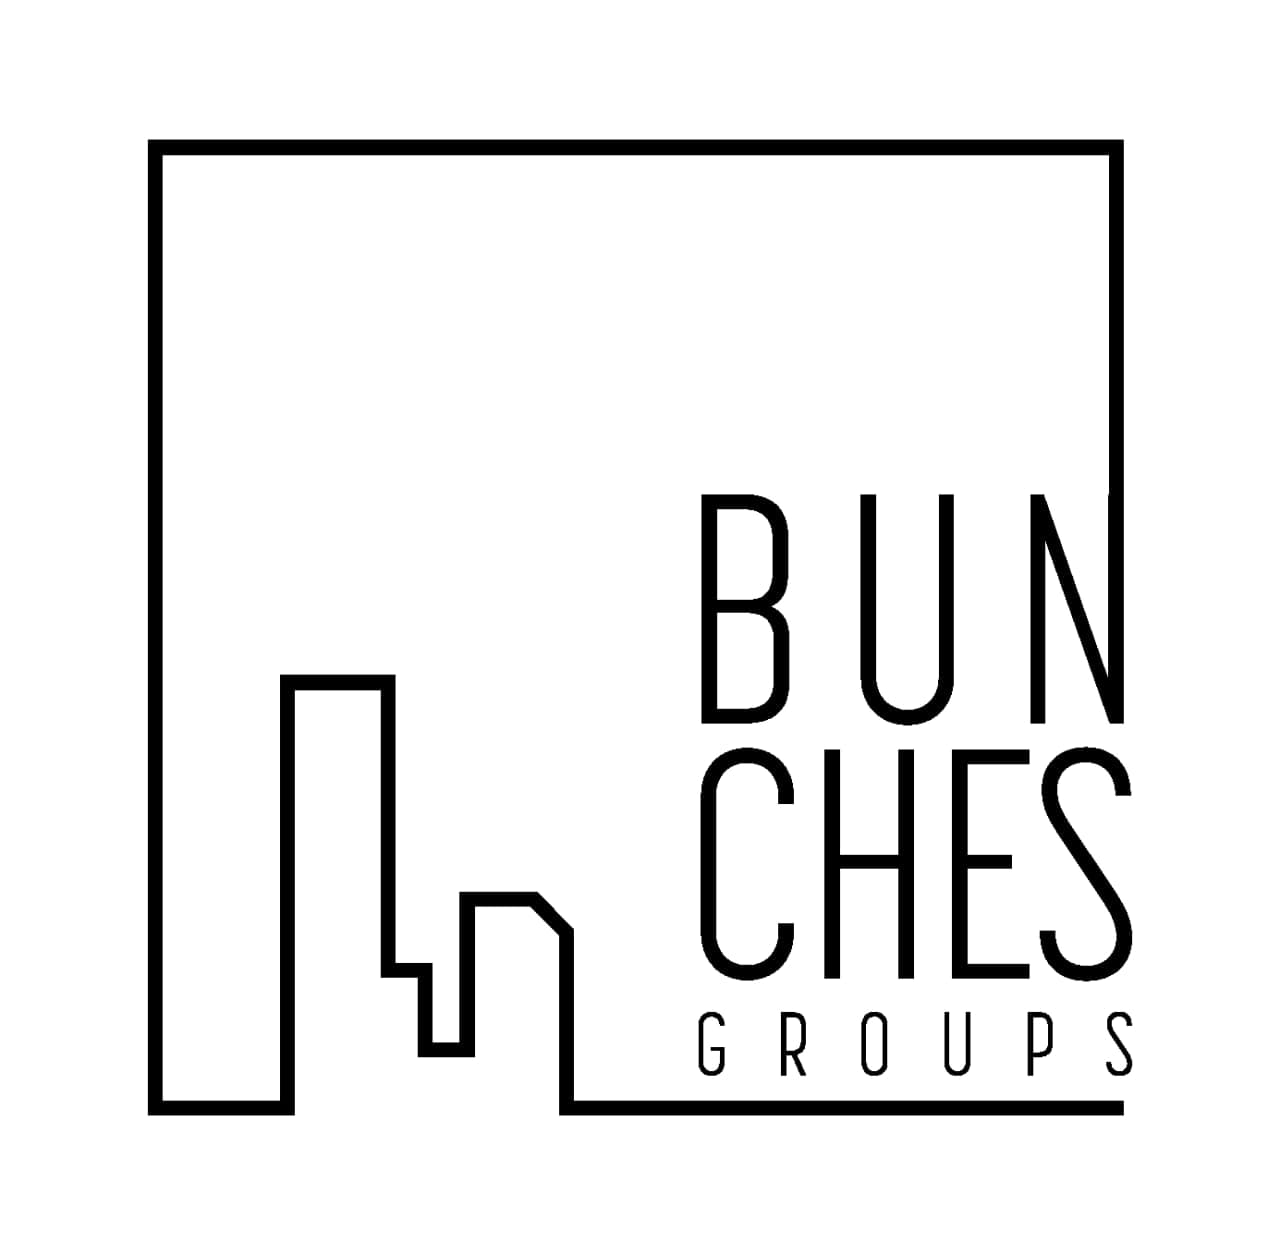 Bun Ches Groups